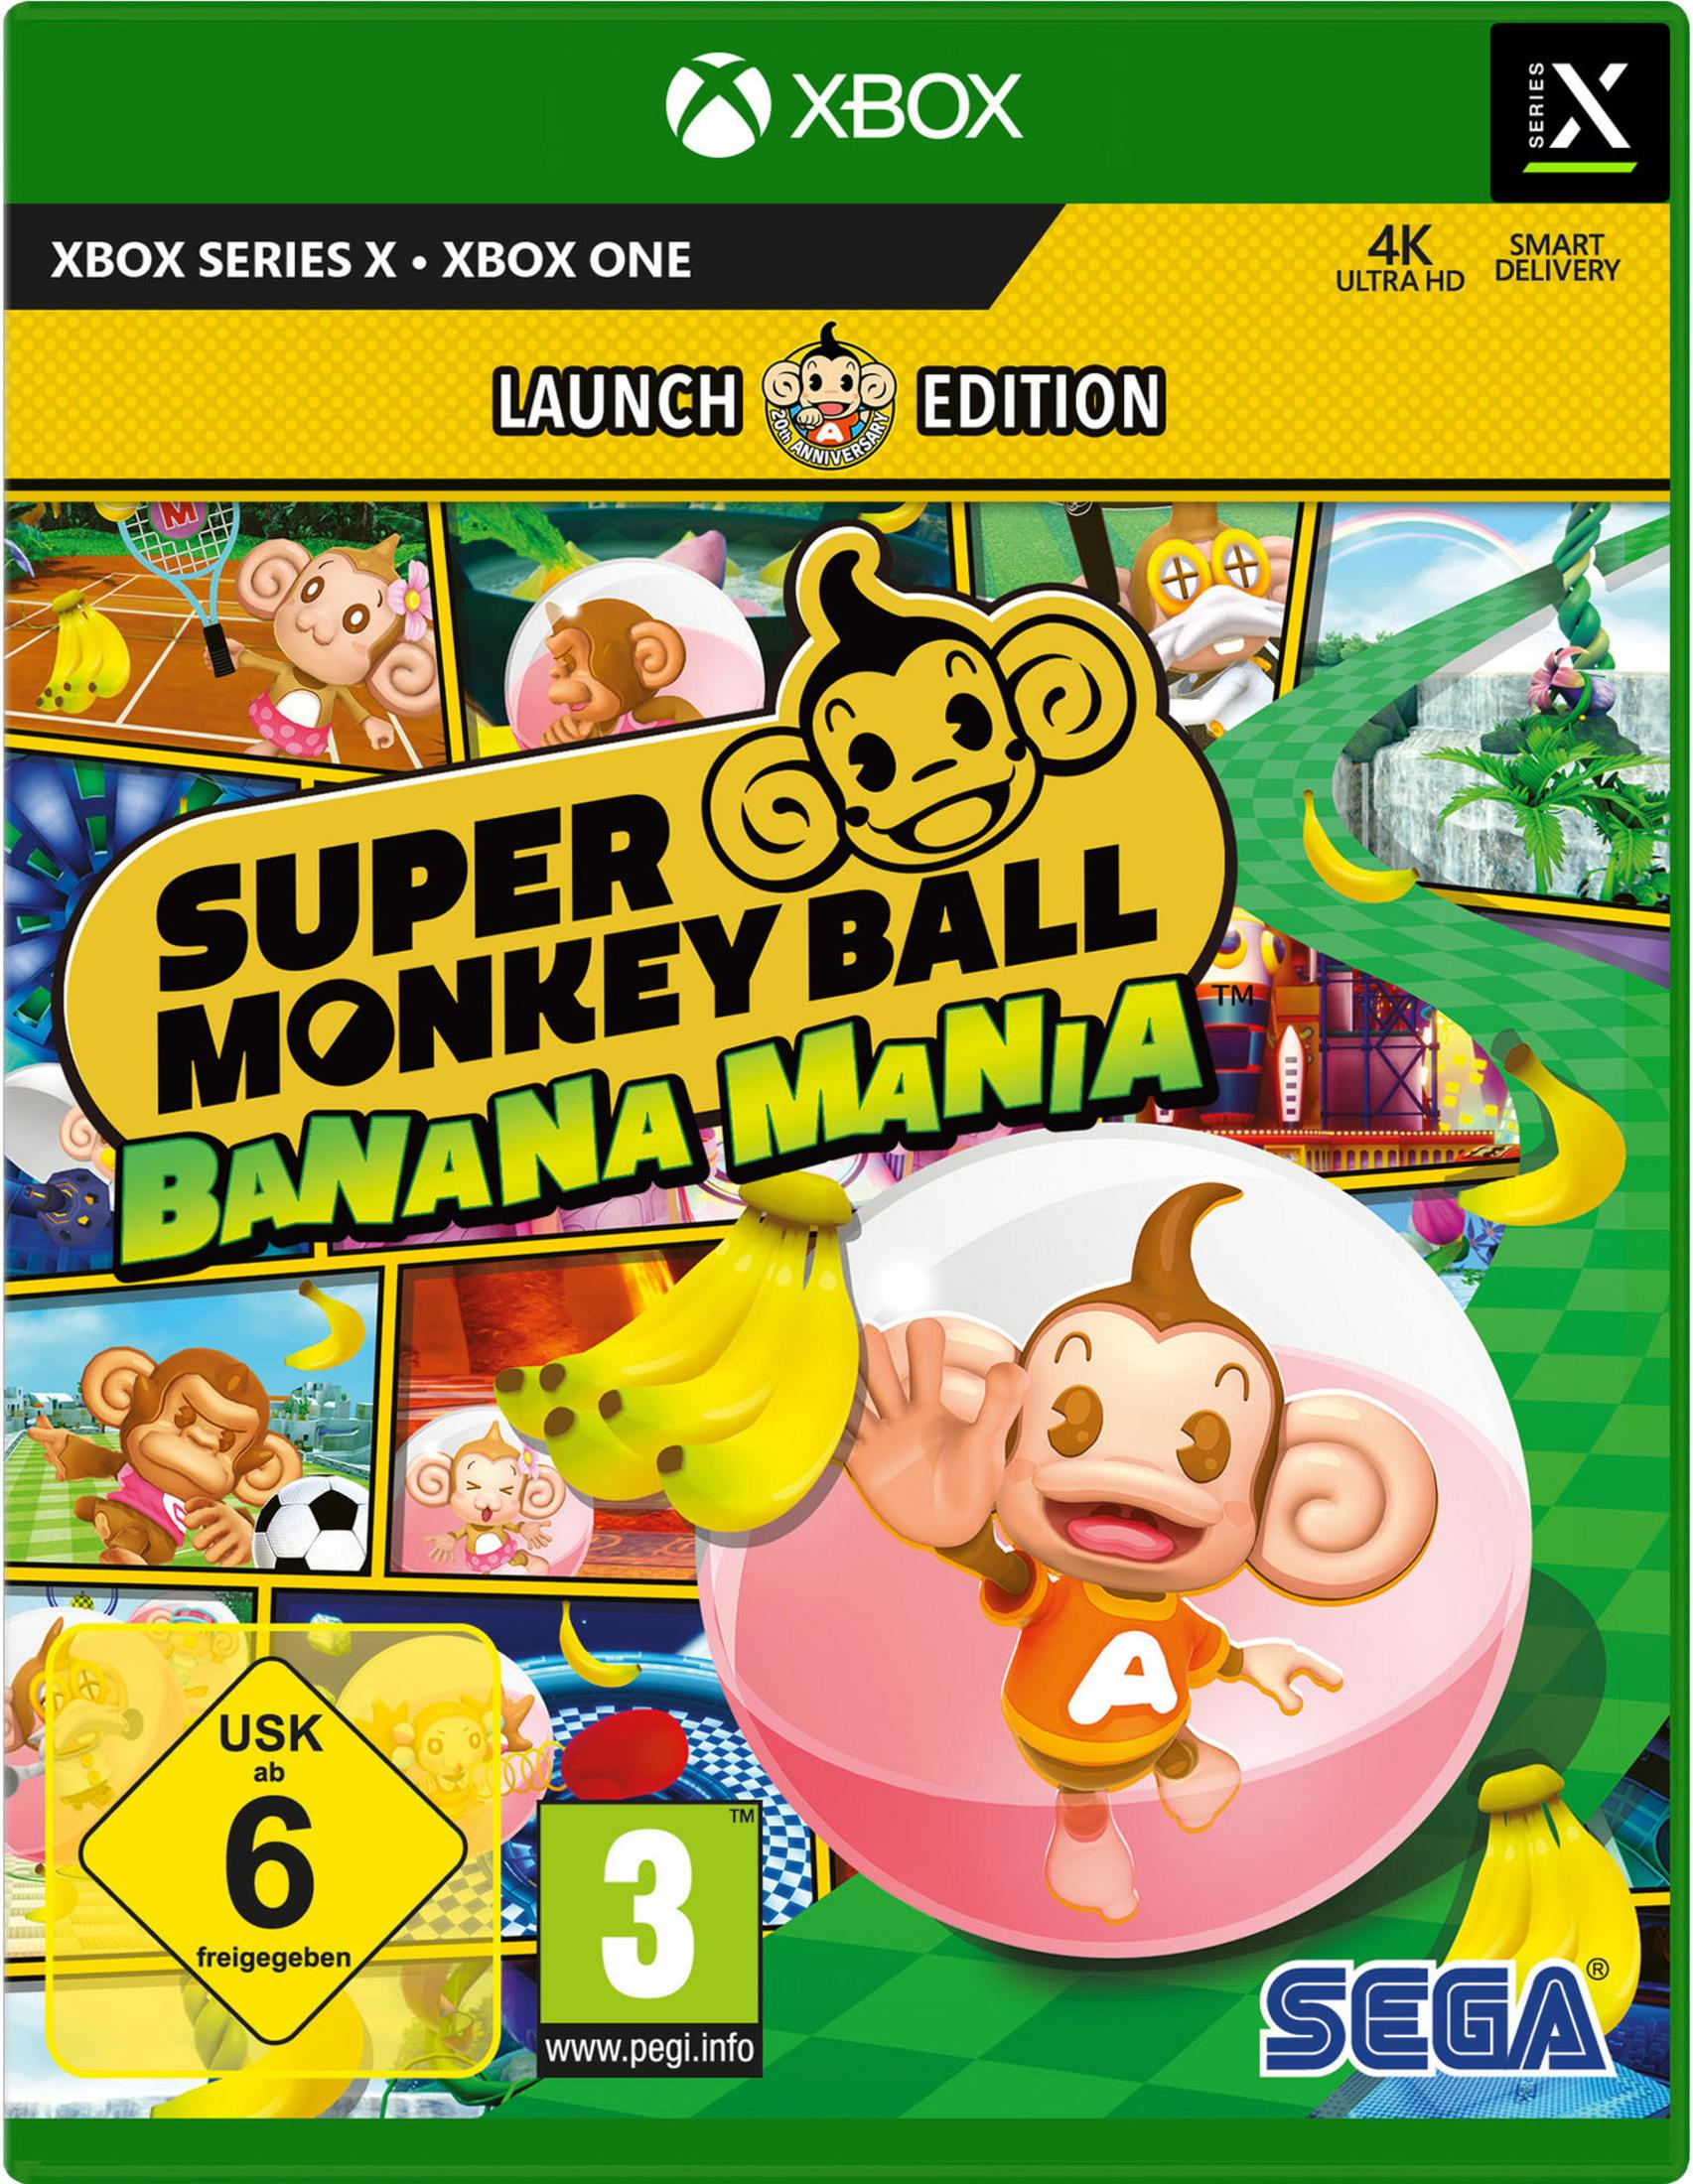 Ball One] [Xbox (Launch Banana Super Monkey - Edition) Mania